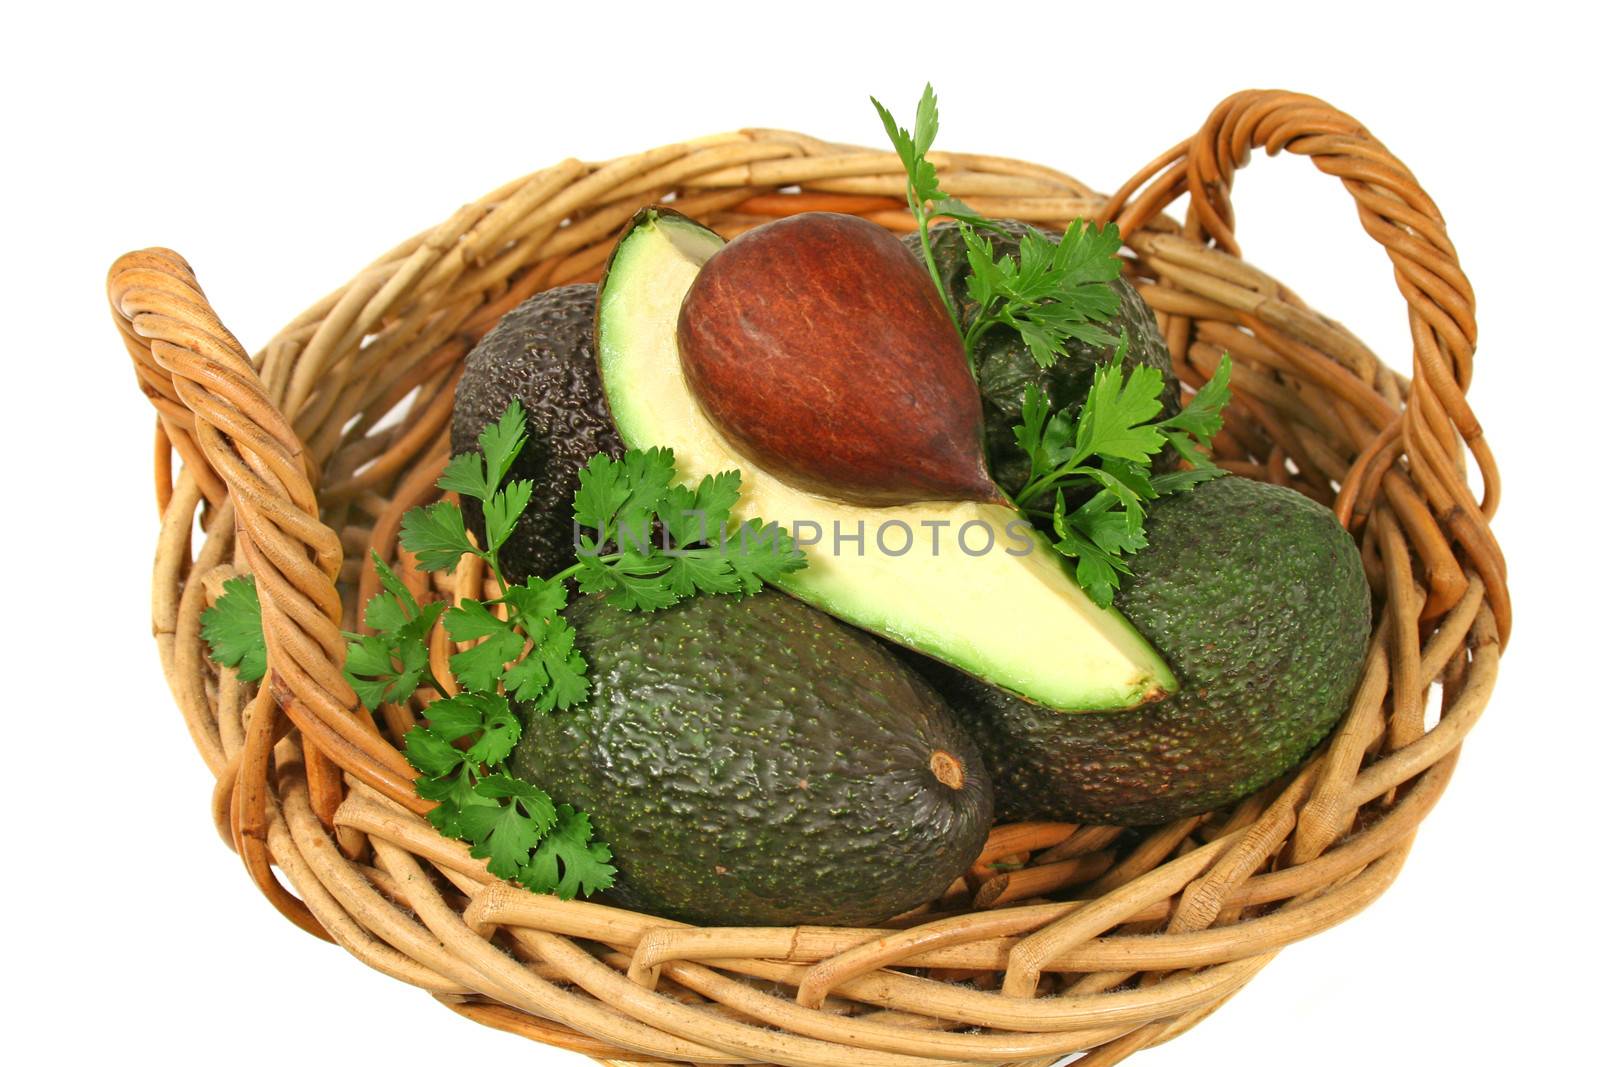 Avocado Quarter In A Basket by jabiru